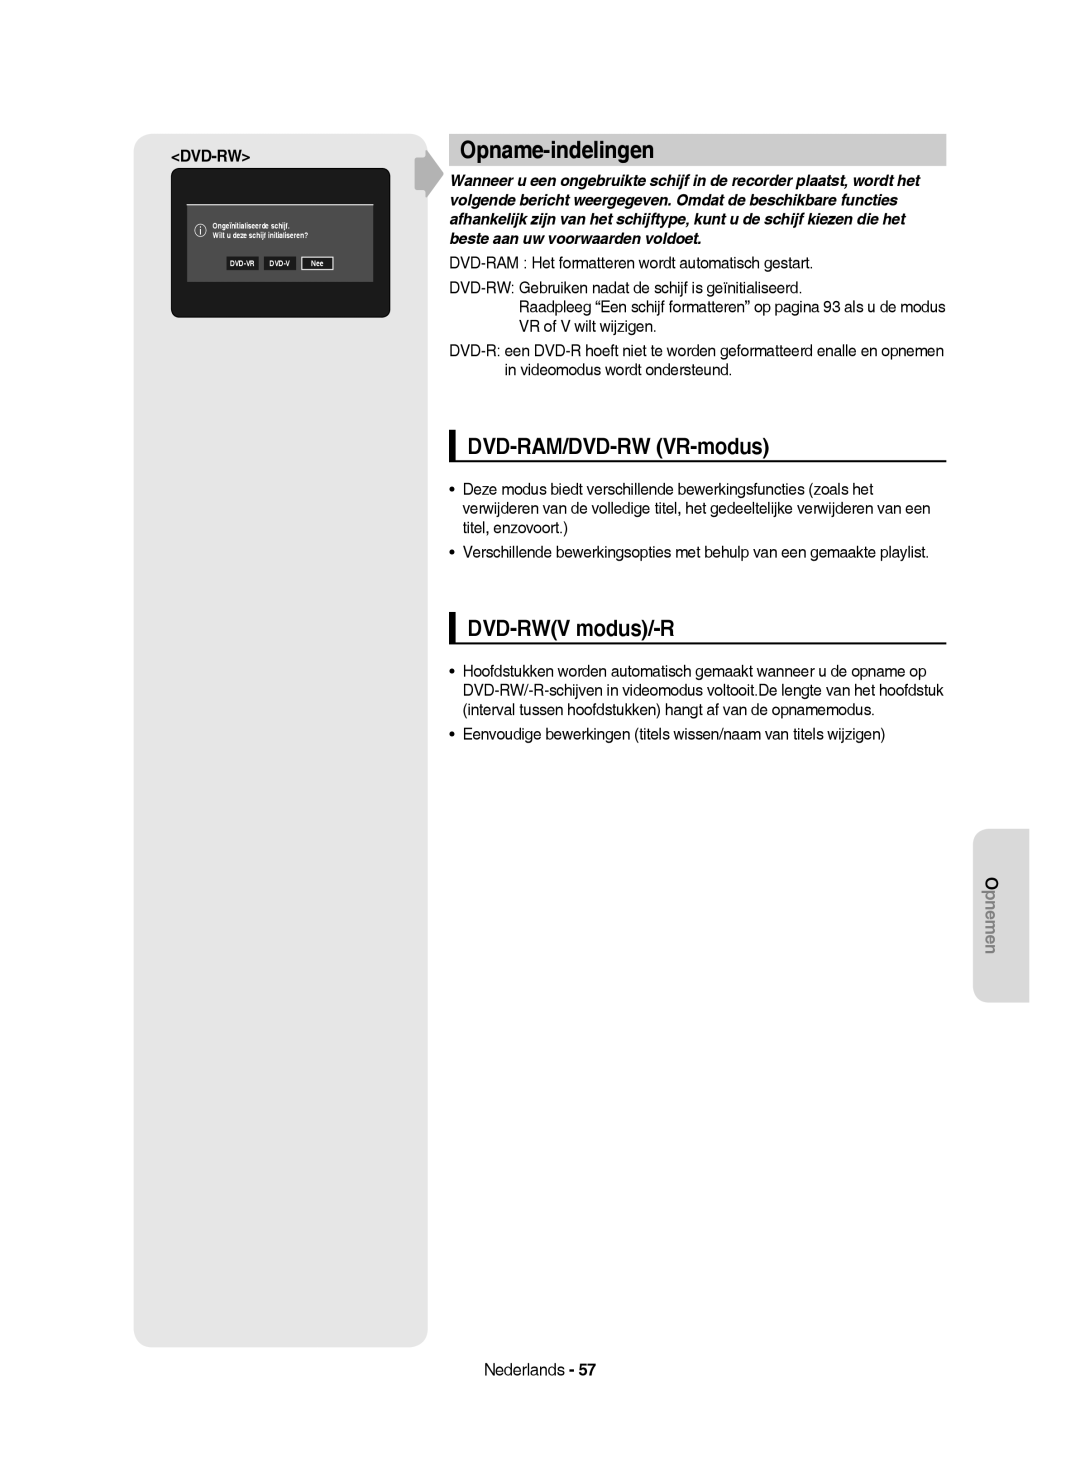 Samsung DVD-HR750/AUS, DVD-HR750/XEG, DVD-HR750/XEB manual Opname-indelingen, DVD-RAM/DVD-RW VR-modus, DVD-RWV modus/-R 